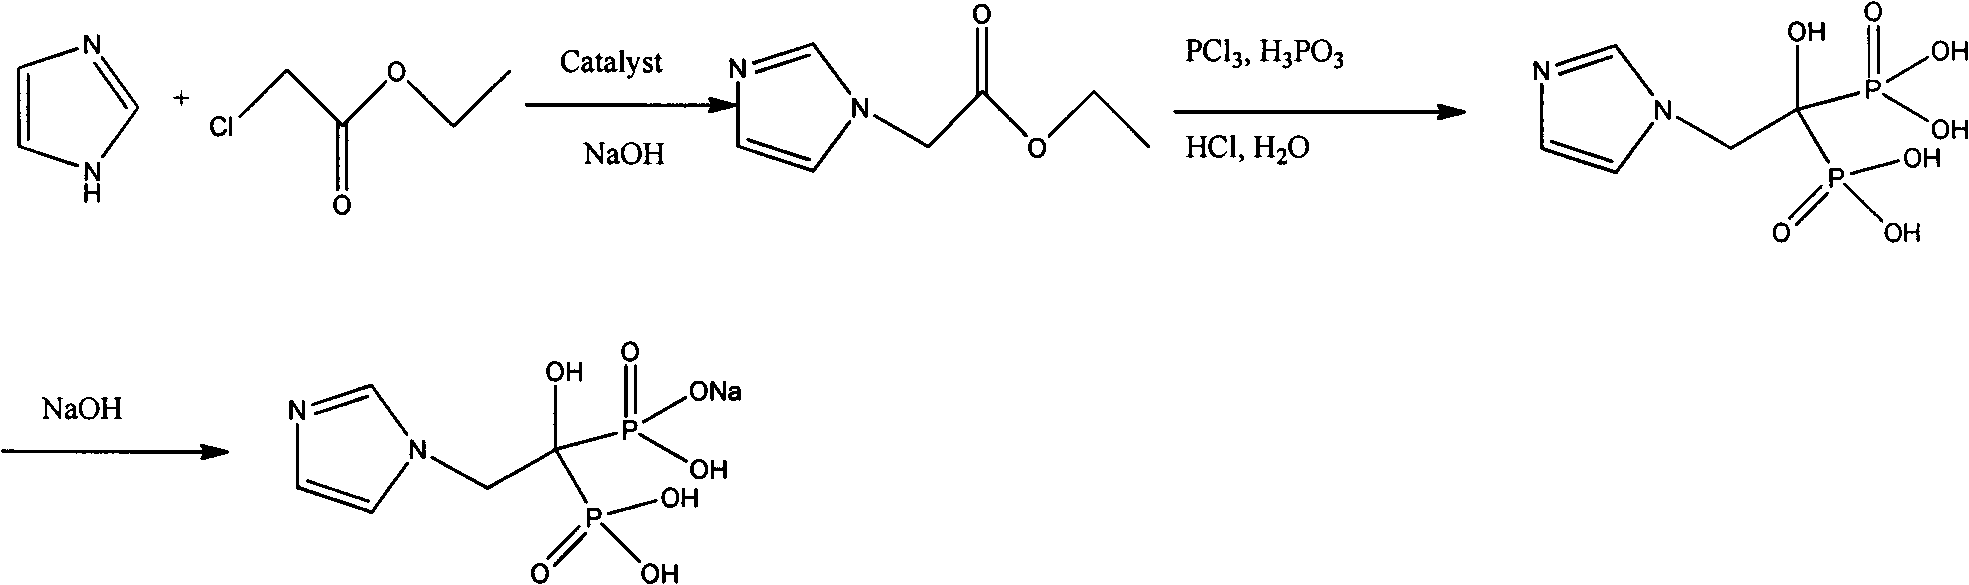 Method for preparing zoledronic acid and sodium salt thereof by utilizing phase transfer catalyst